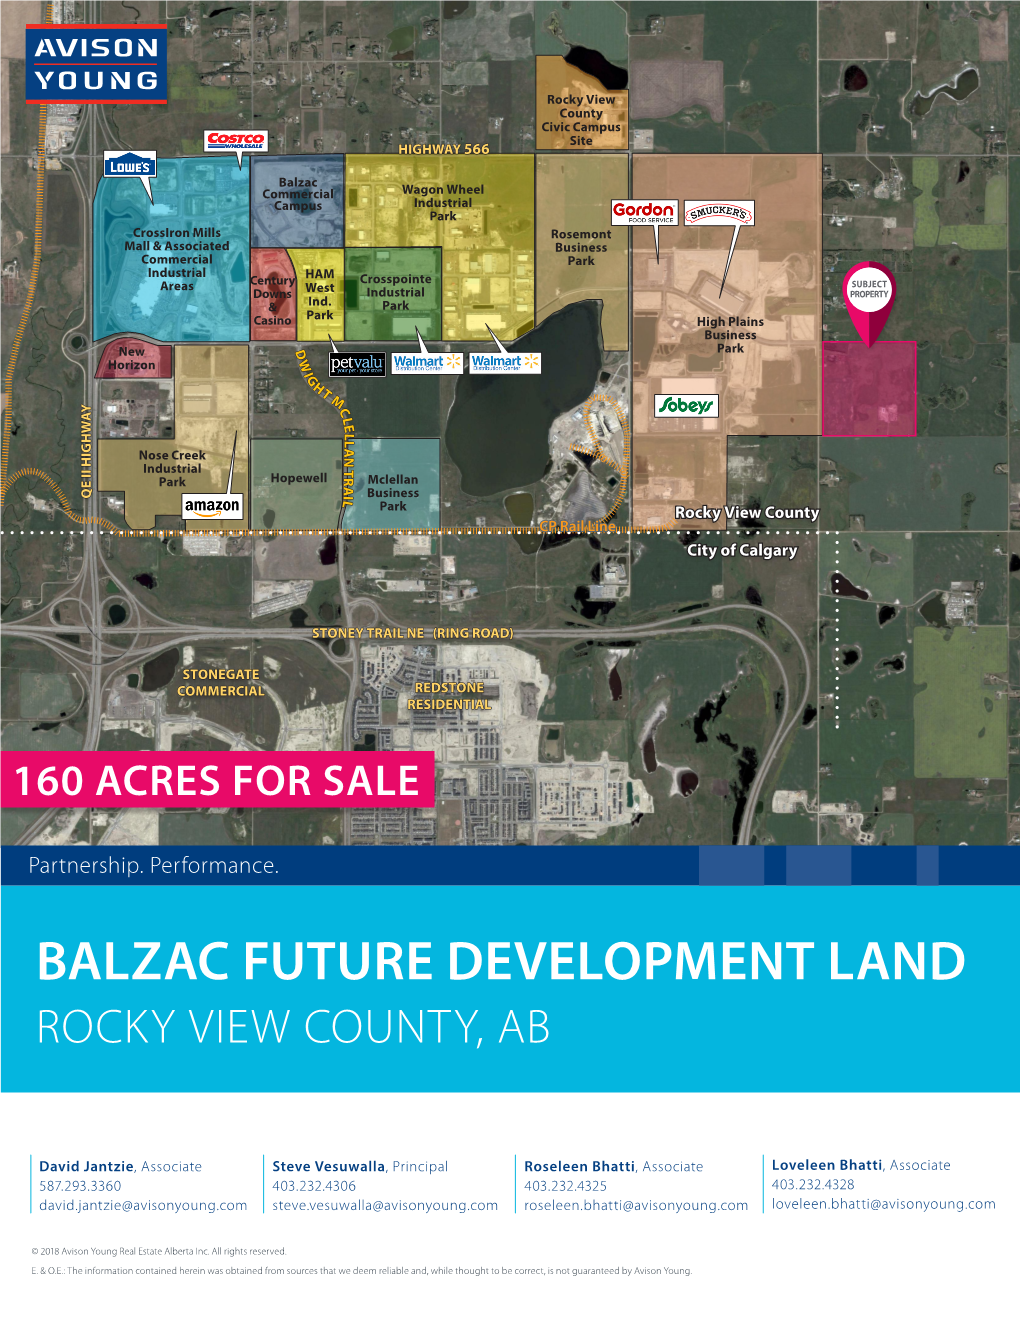 Balzac Future Development Land Rocky View County, Ab